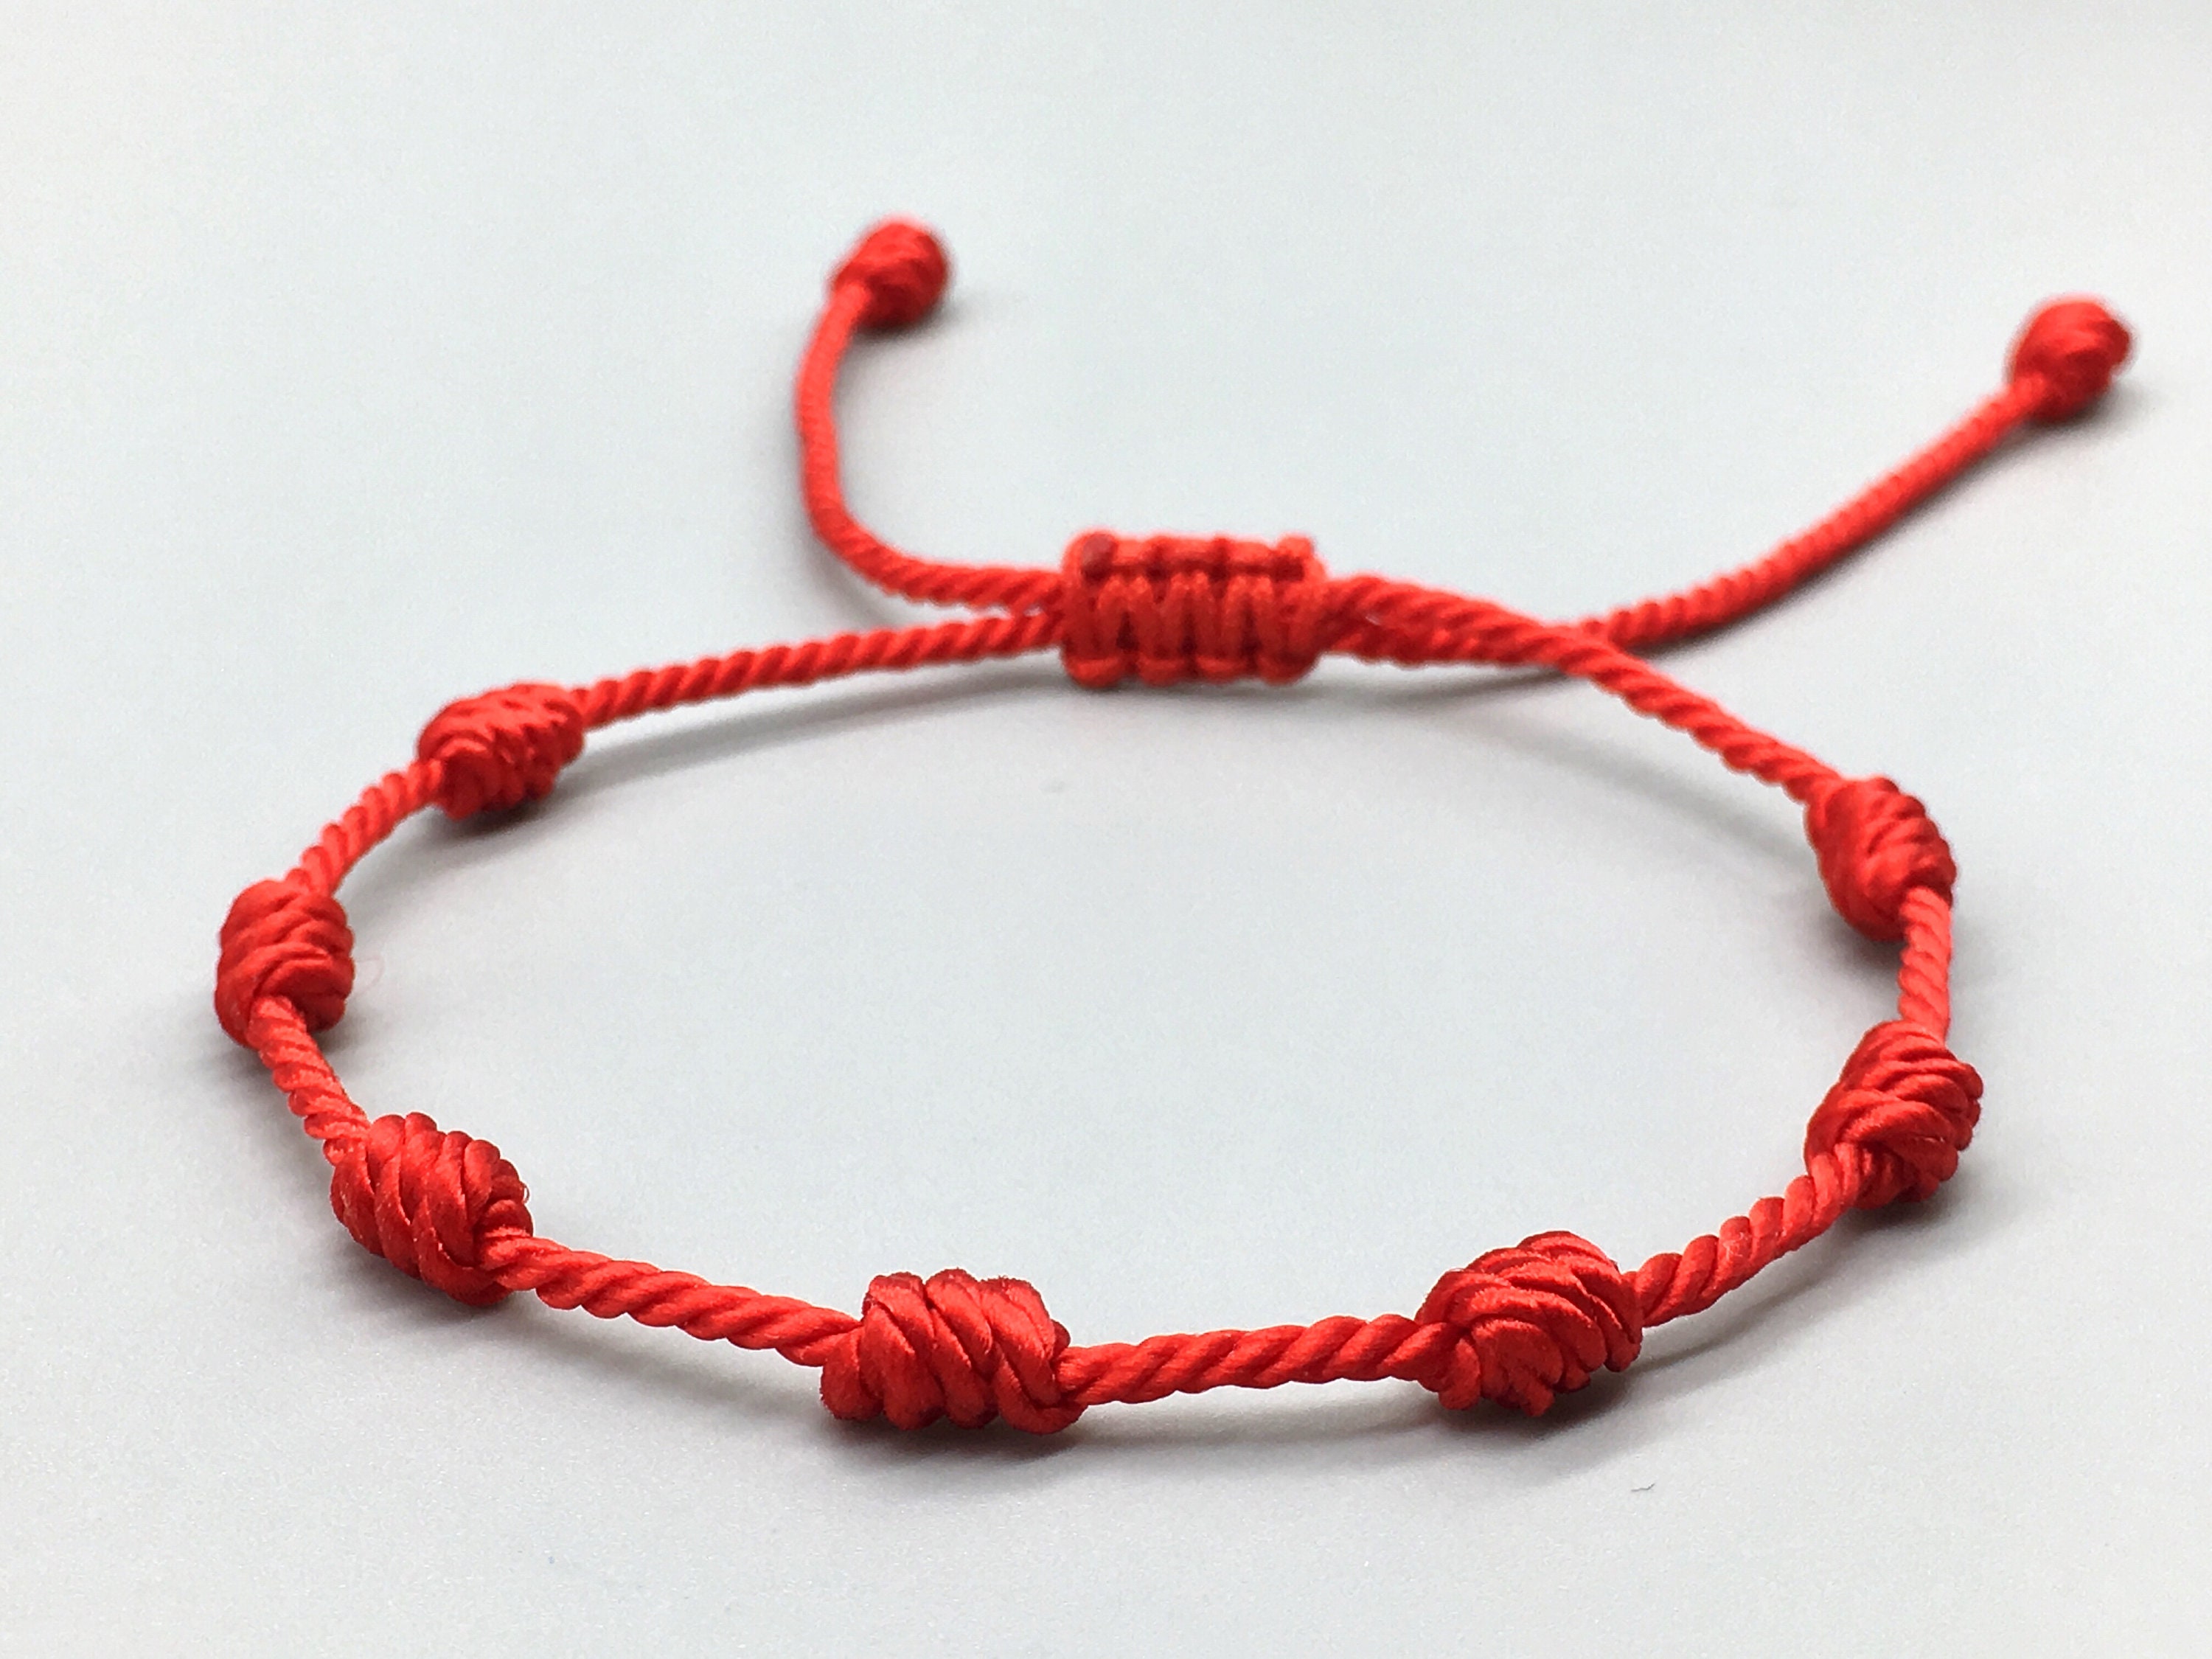 Men's Red Cord Bracelet - Protection Bracelet - Amulet Bracelet - Sterling Silver Clasp - Red Cord Bracelet for Men - Red String Bracelet